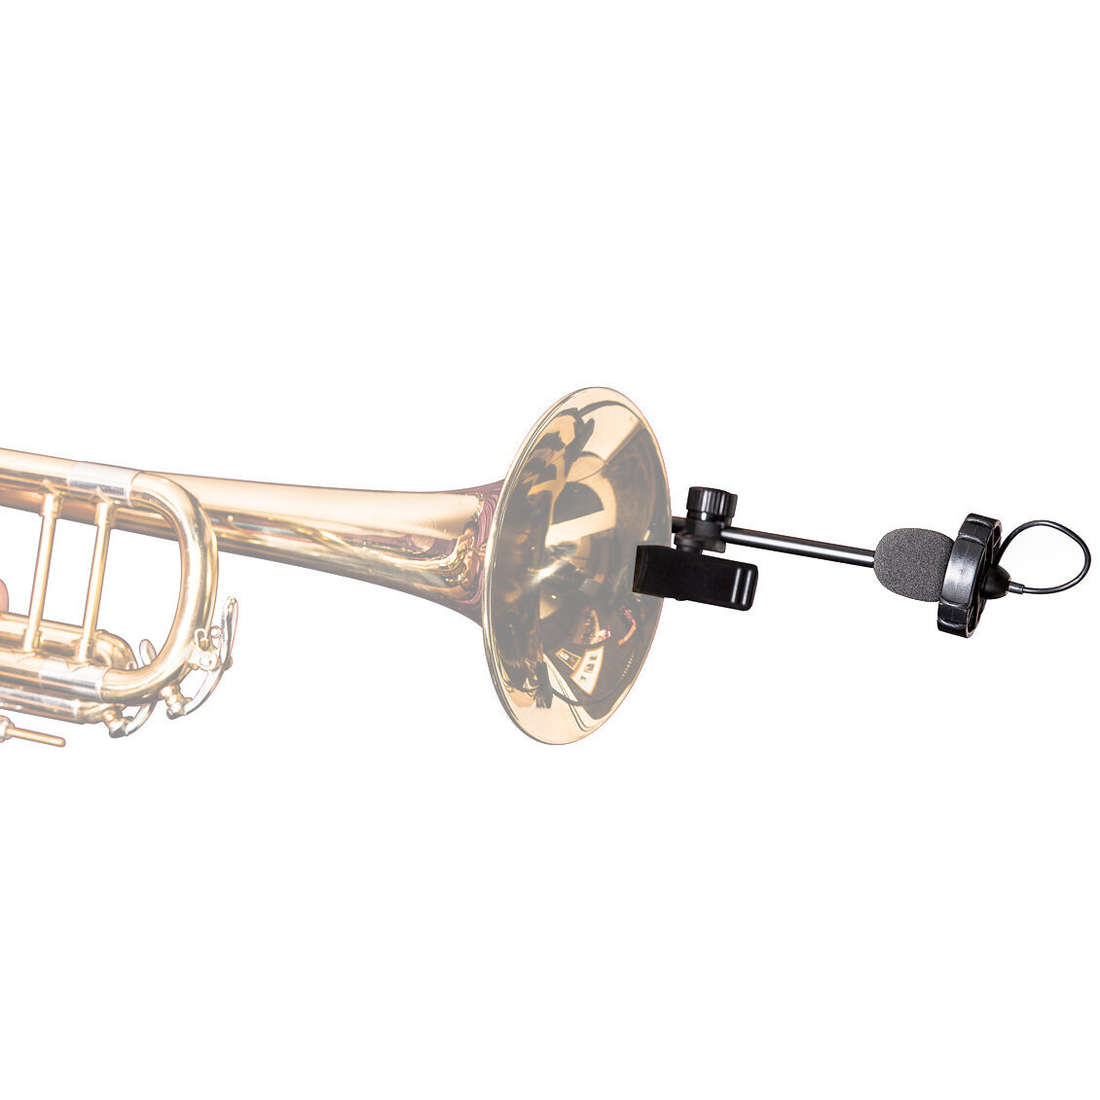 Prodipe SB21 Sax and Brass